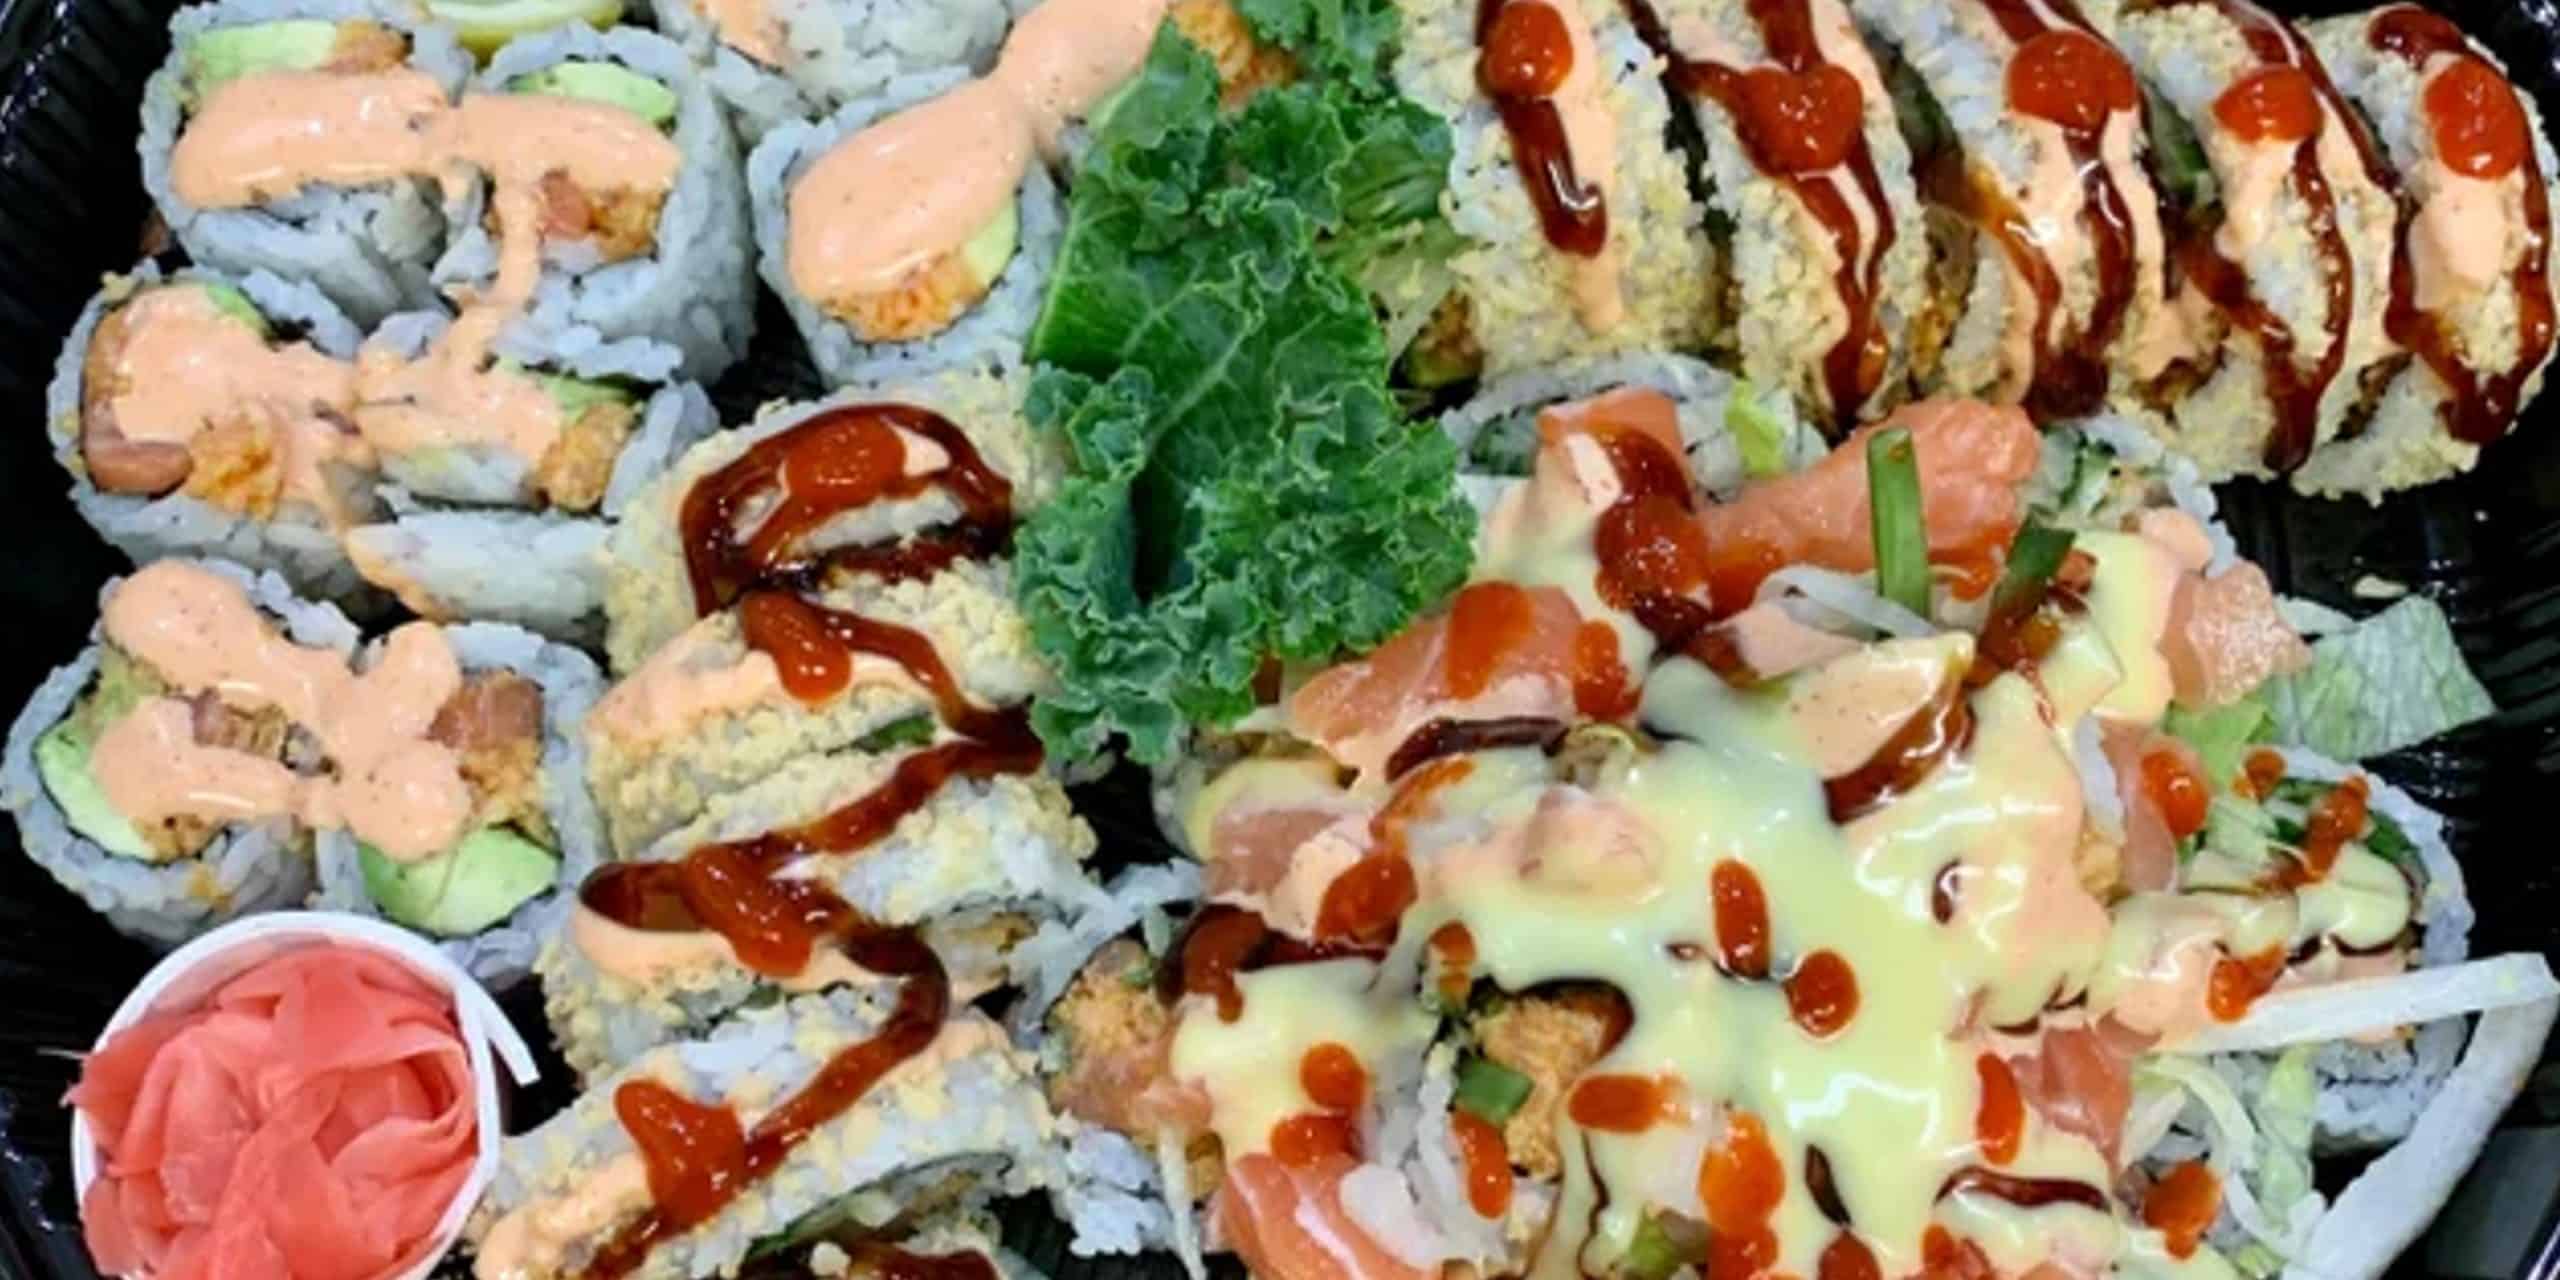 Popular Japanese sushi restaurant set to open 2nd Hamilton location